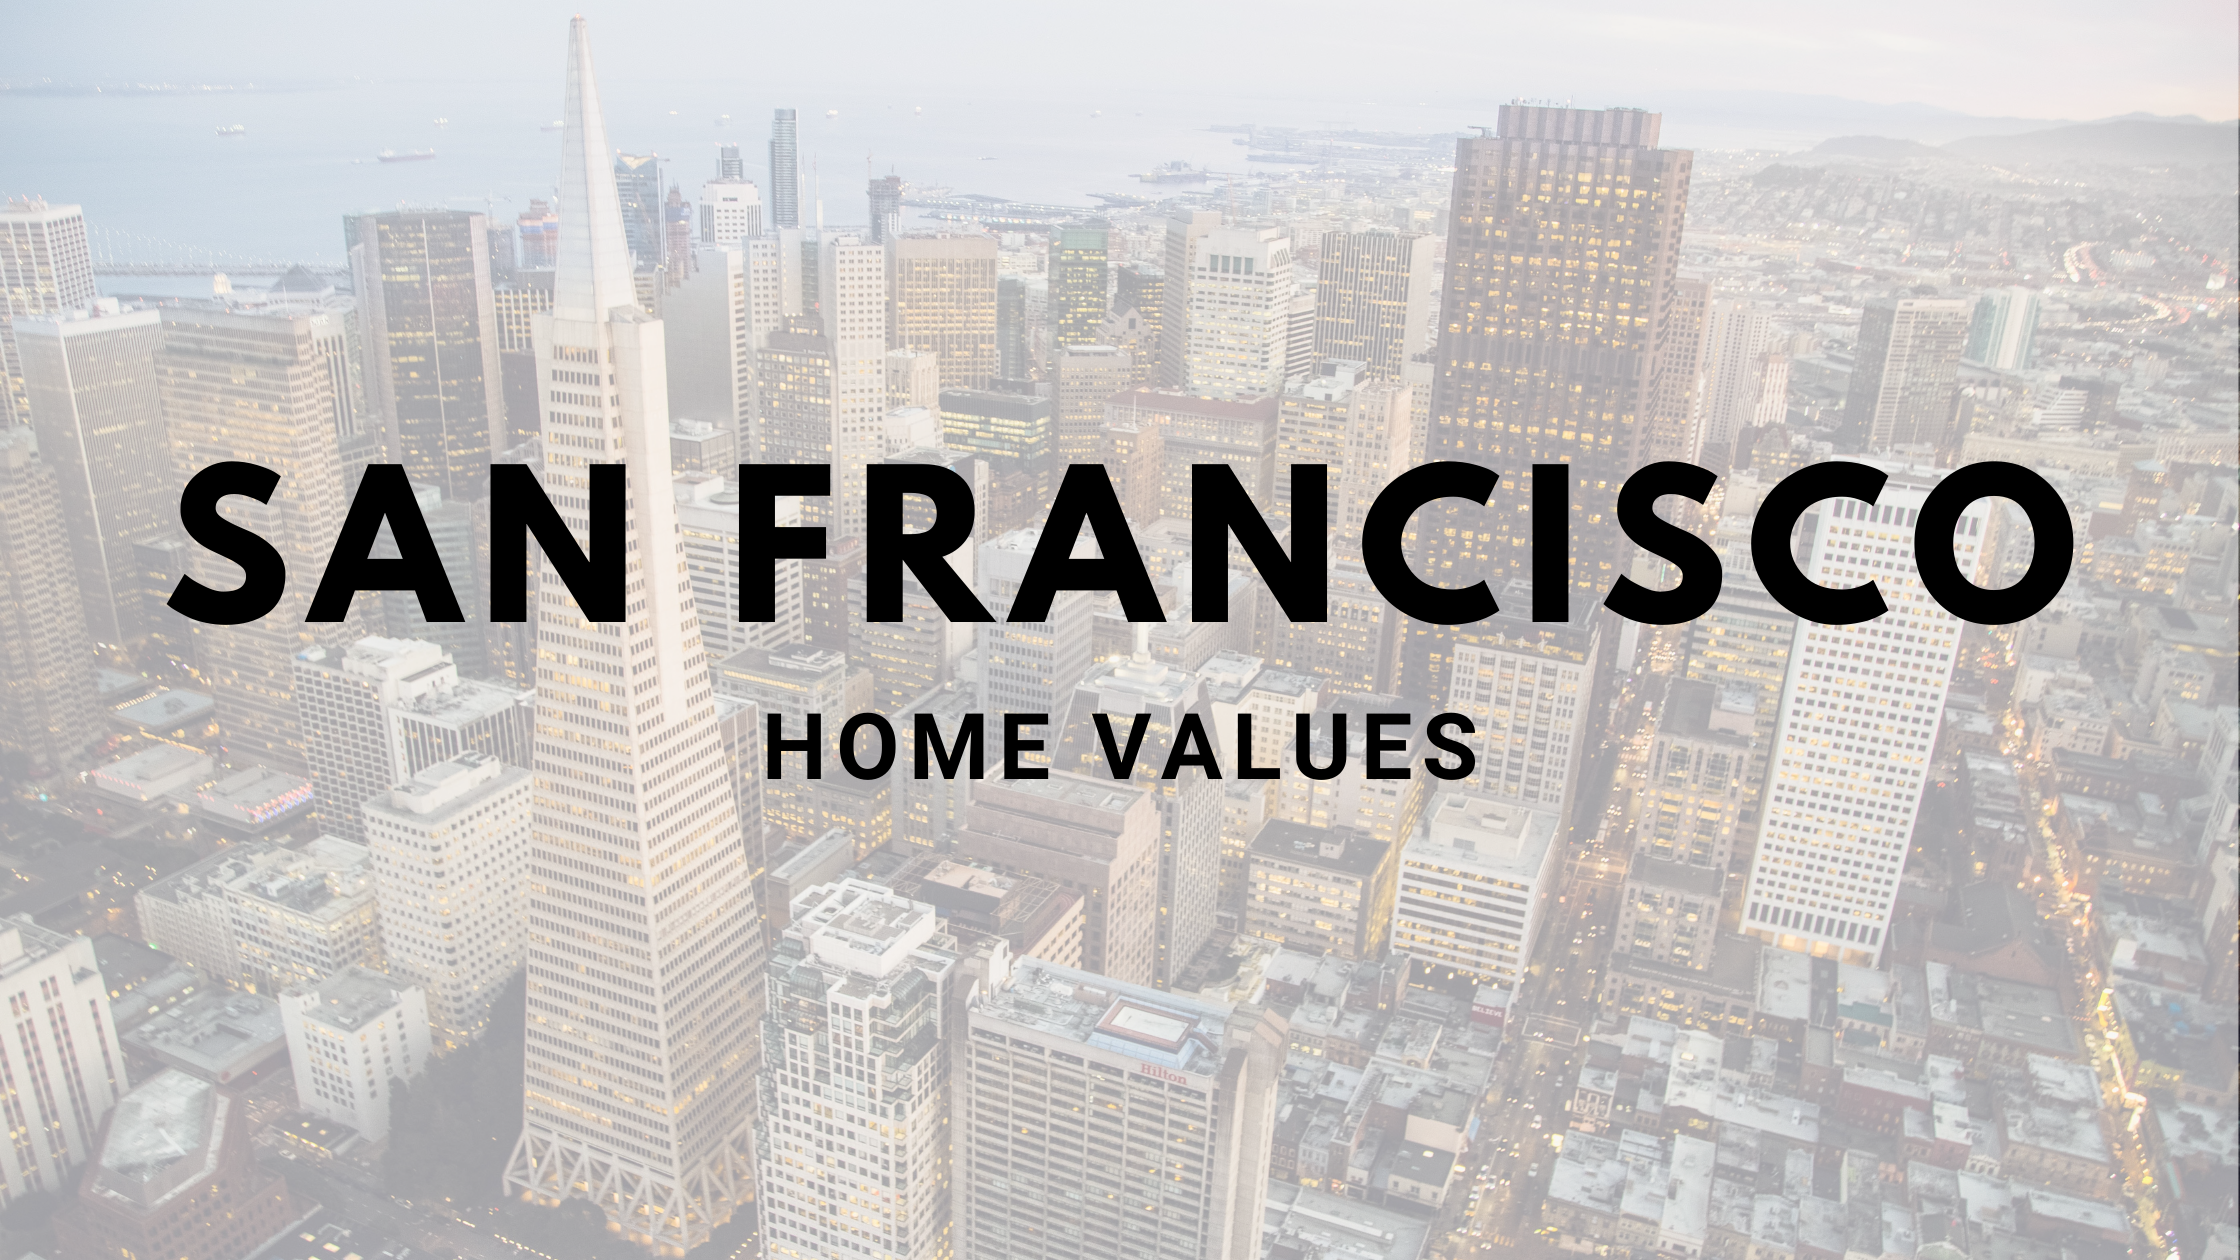 San Francisco Home Values Post Cover Photo